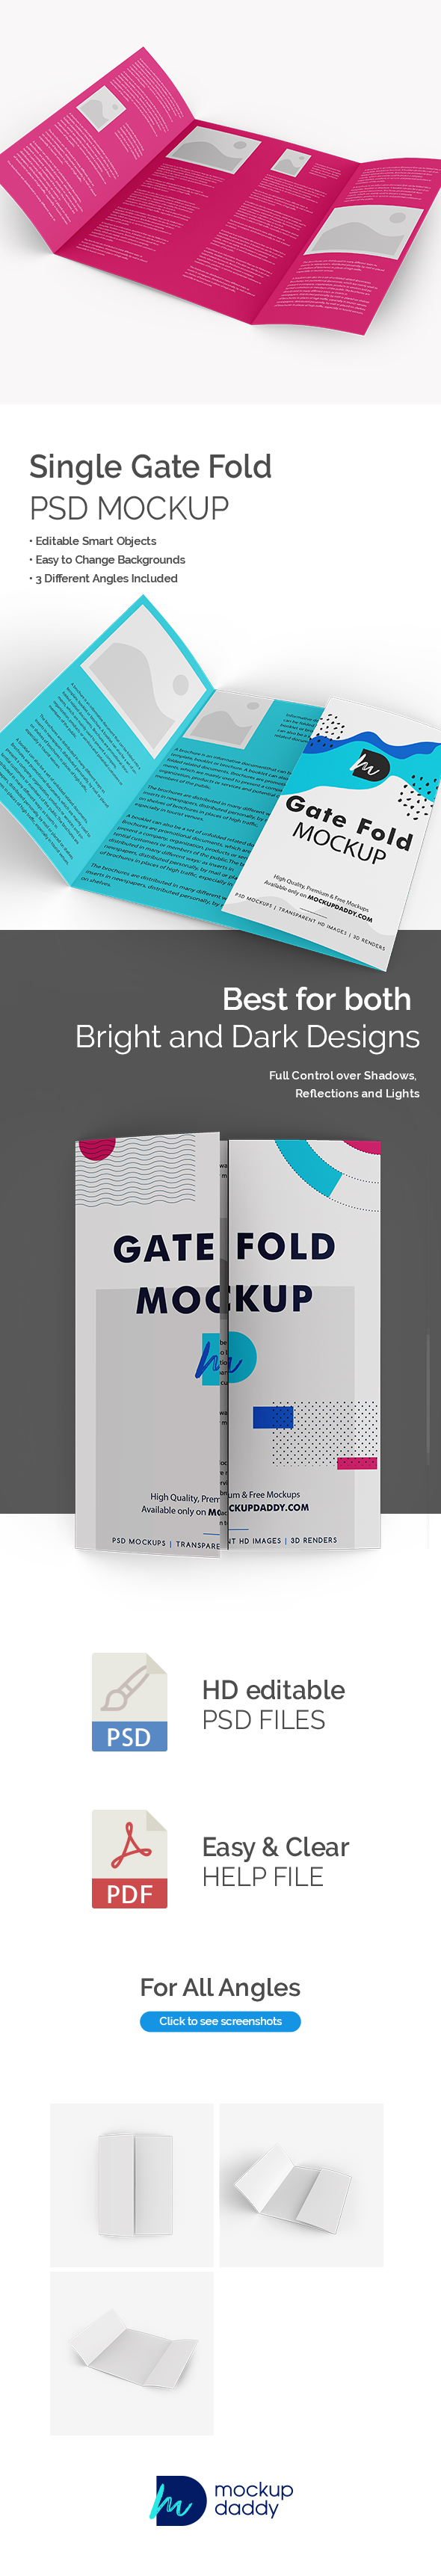 Gate Fold Mockup Featured